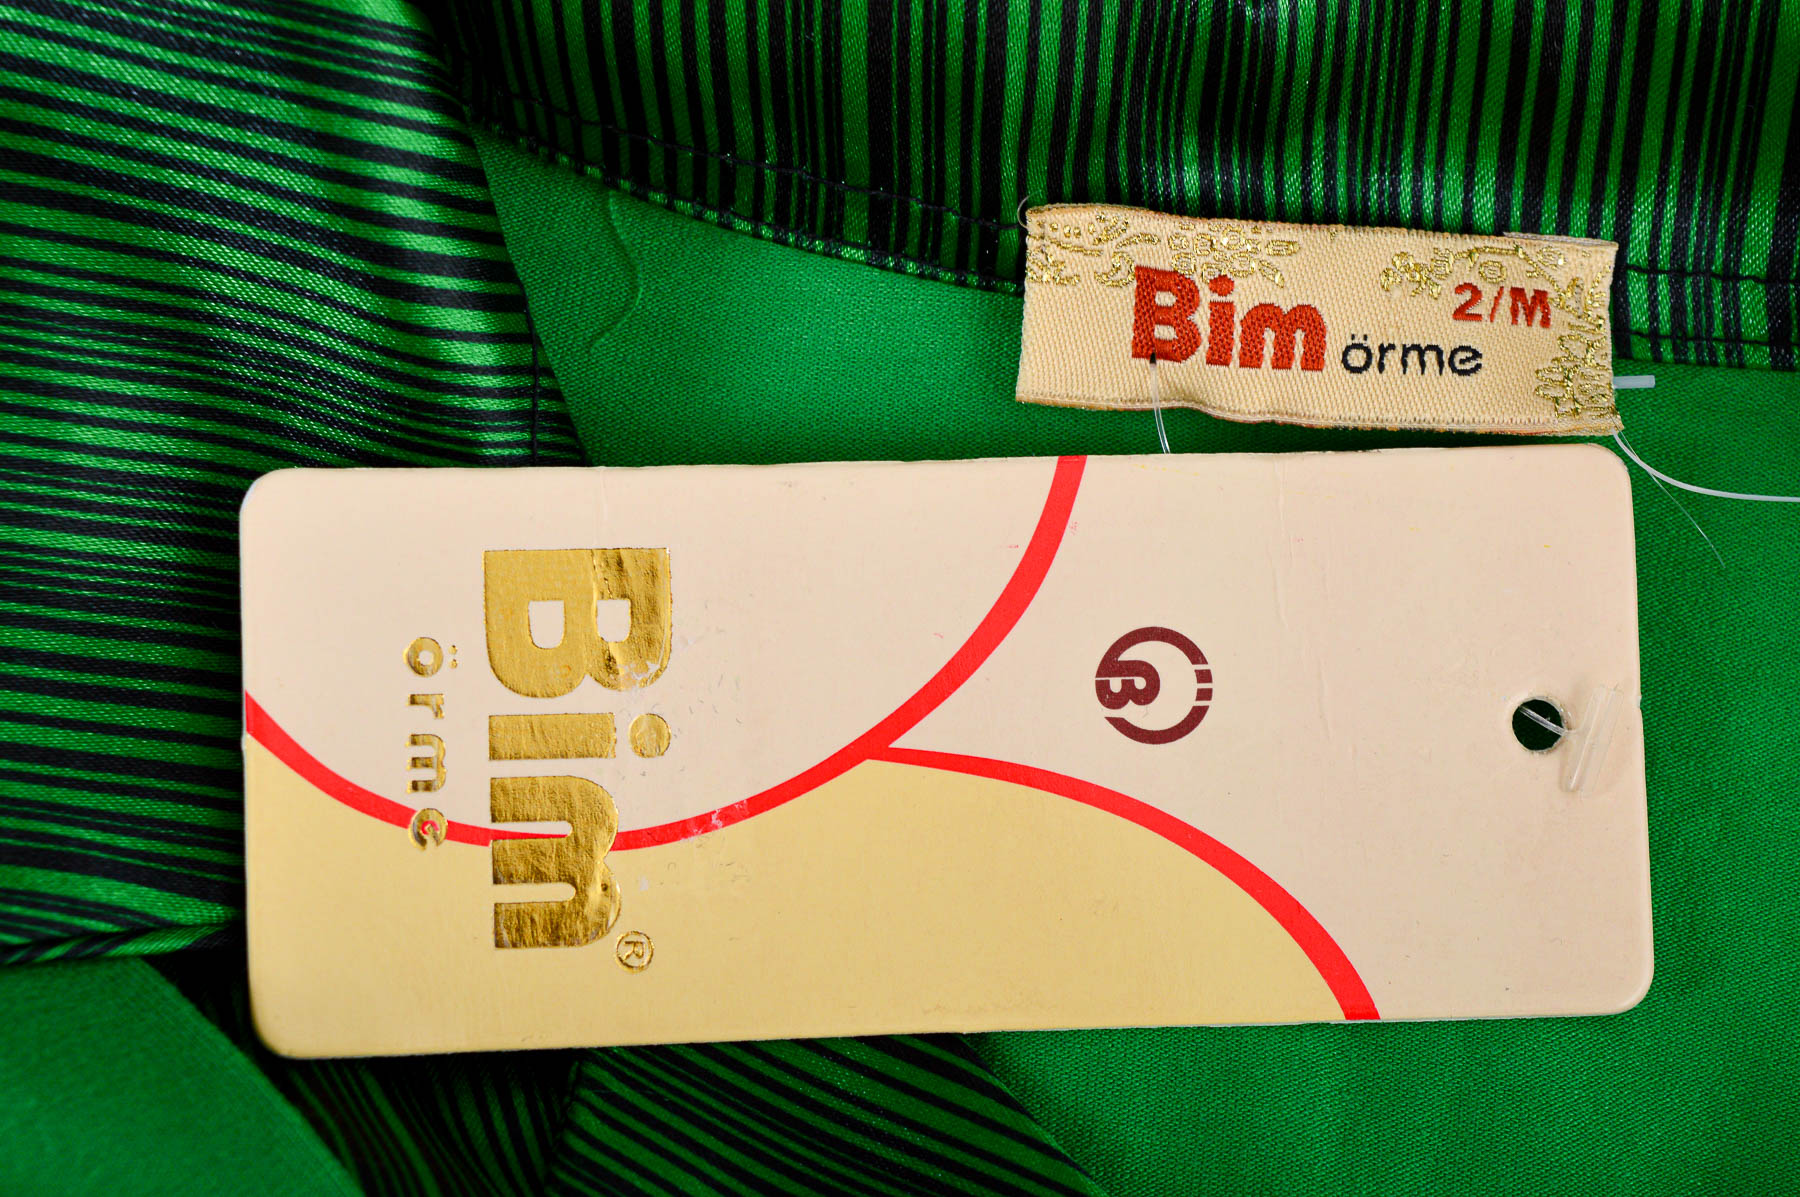 Дамска блуза - Bim orme - 2